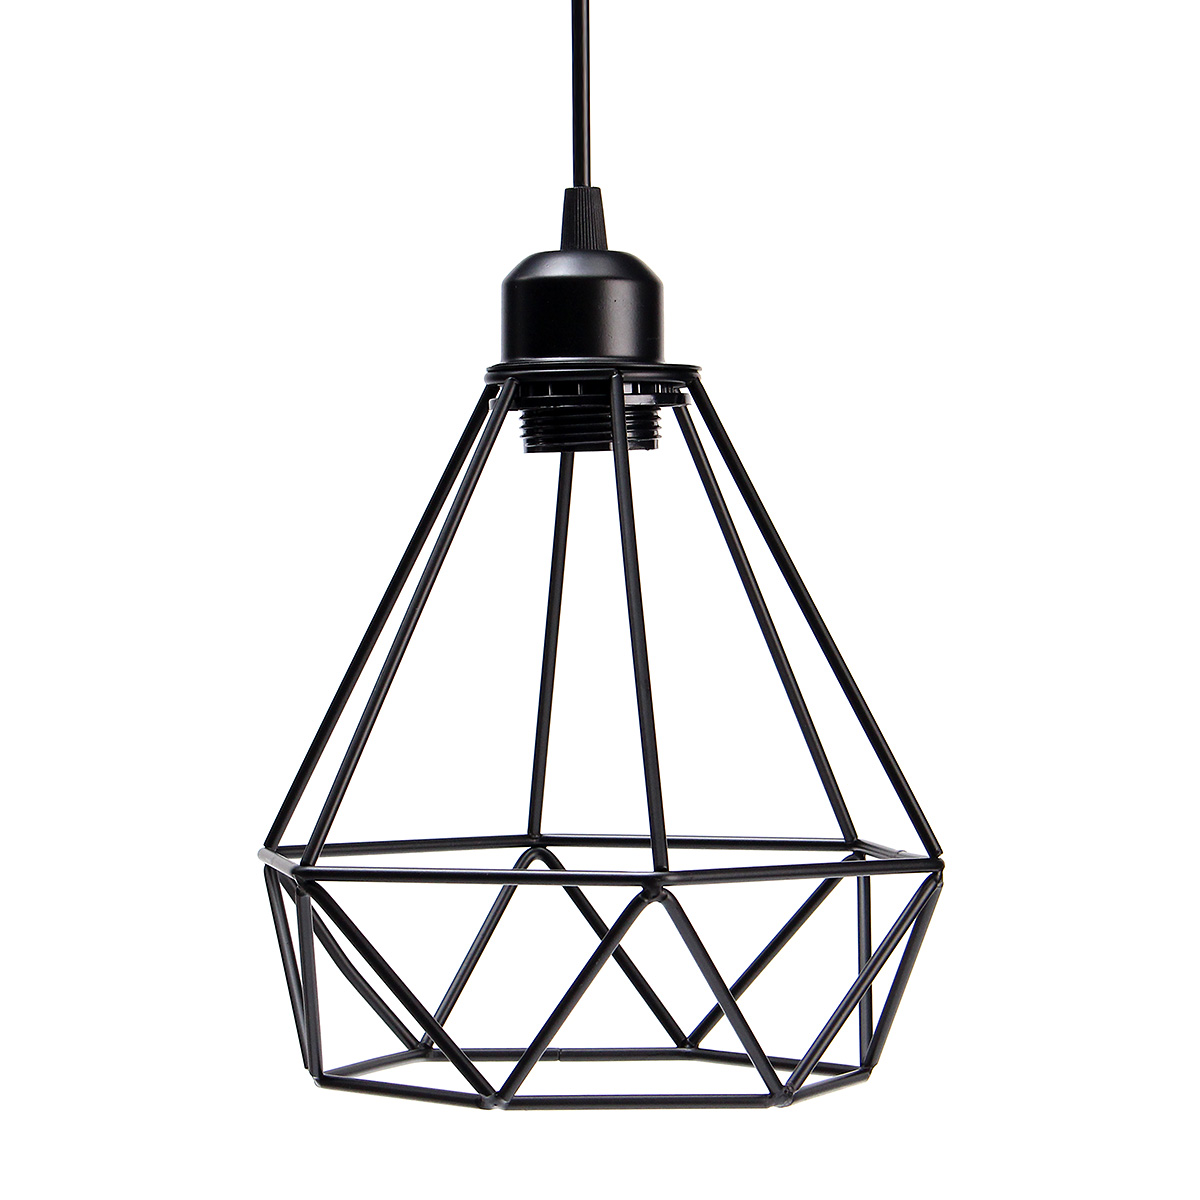 Industrial-Vintage-Metal-Cage-Hanging-Ceiling-Pendant-Lamp-Lighting-Holder-Shade-1534598-4